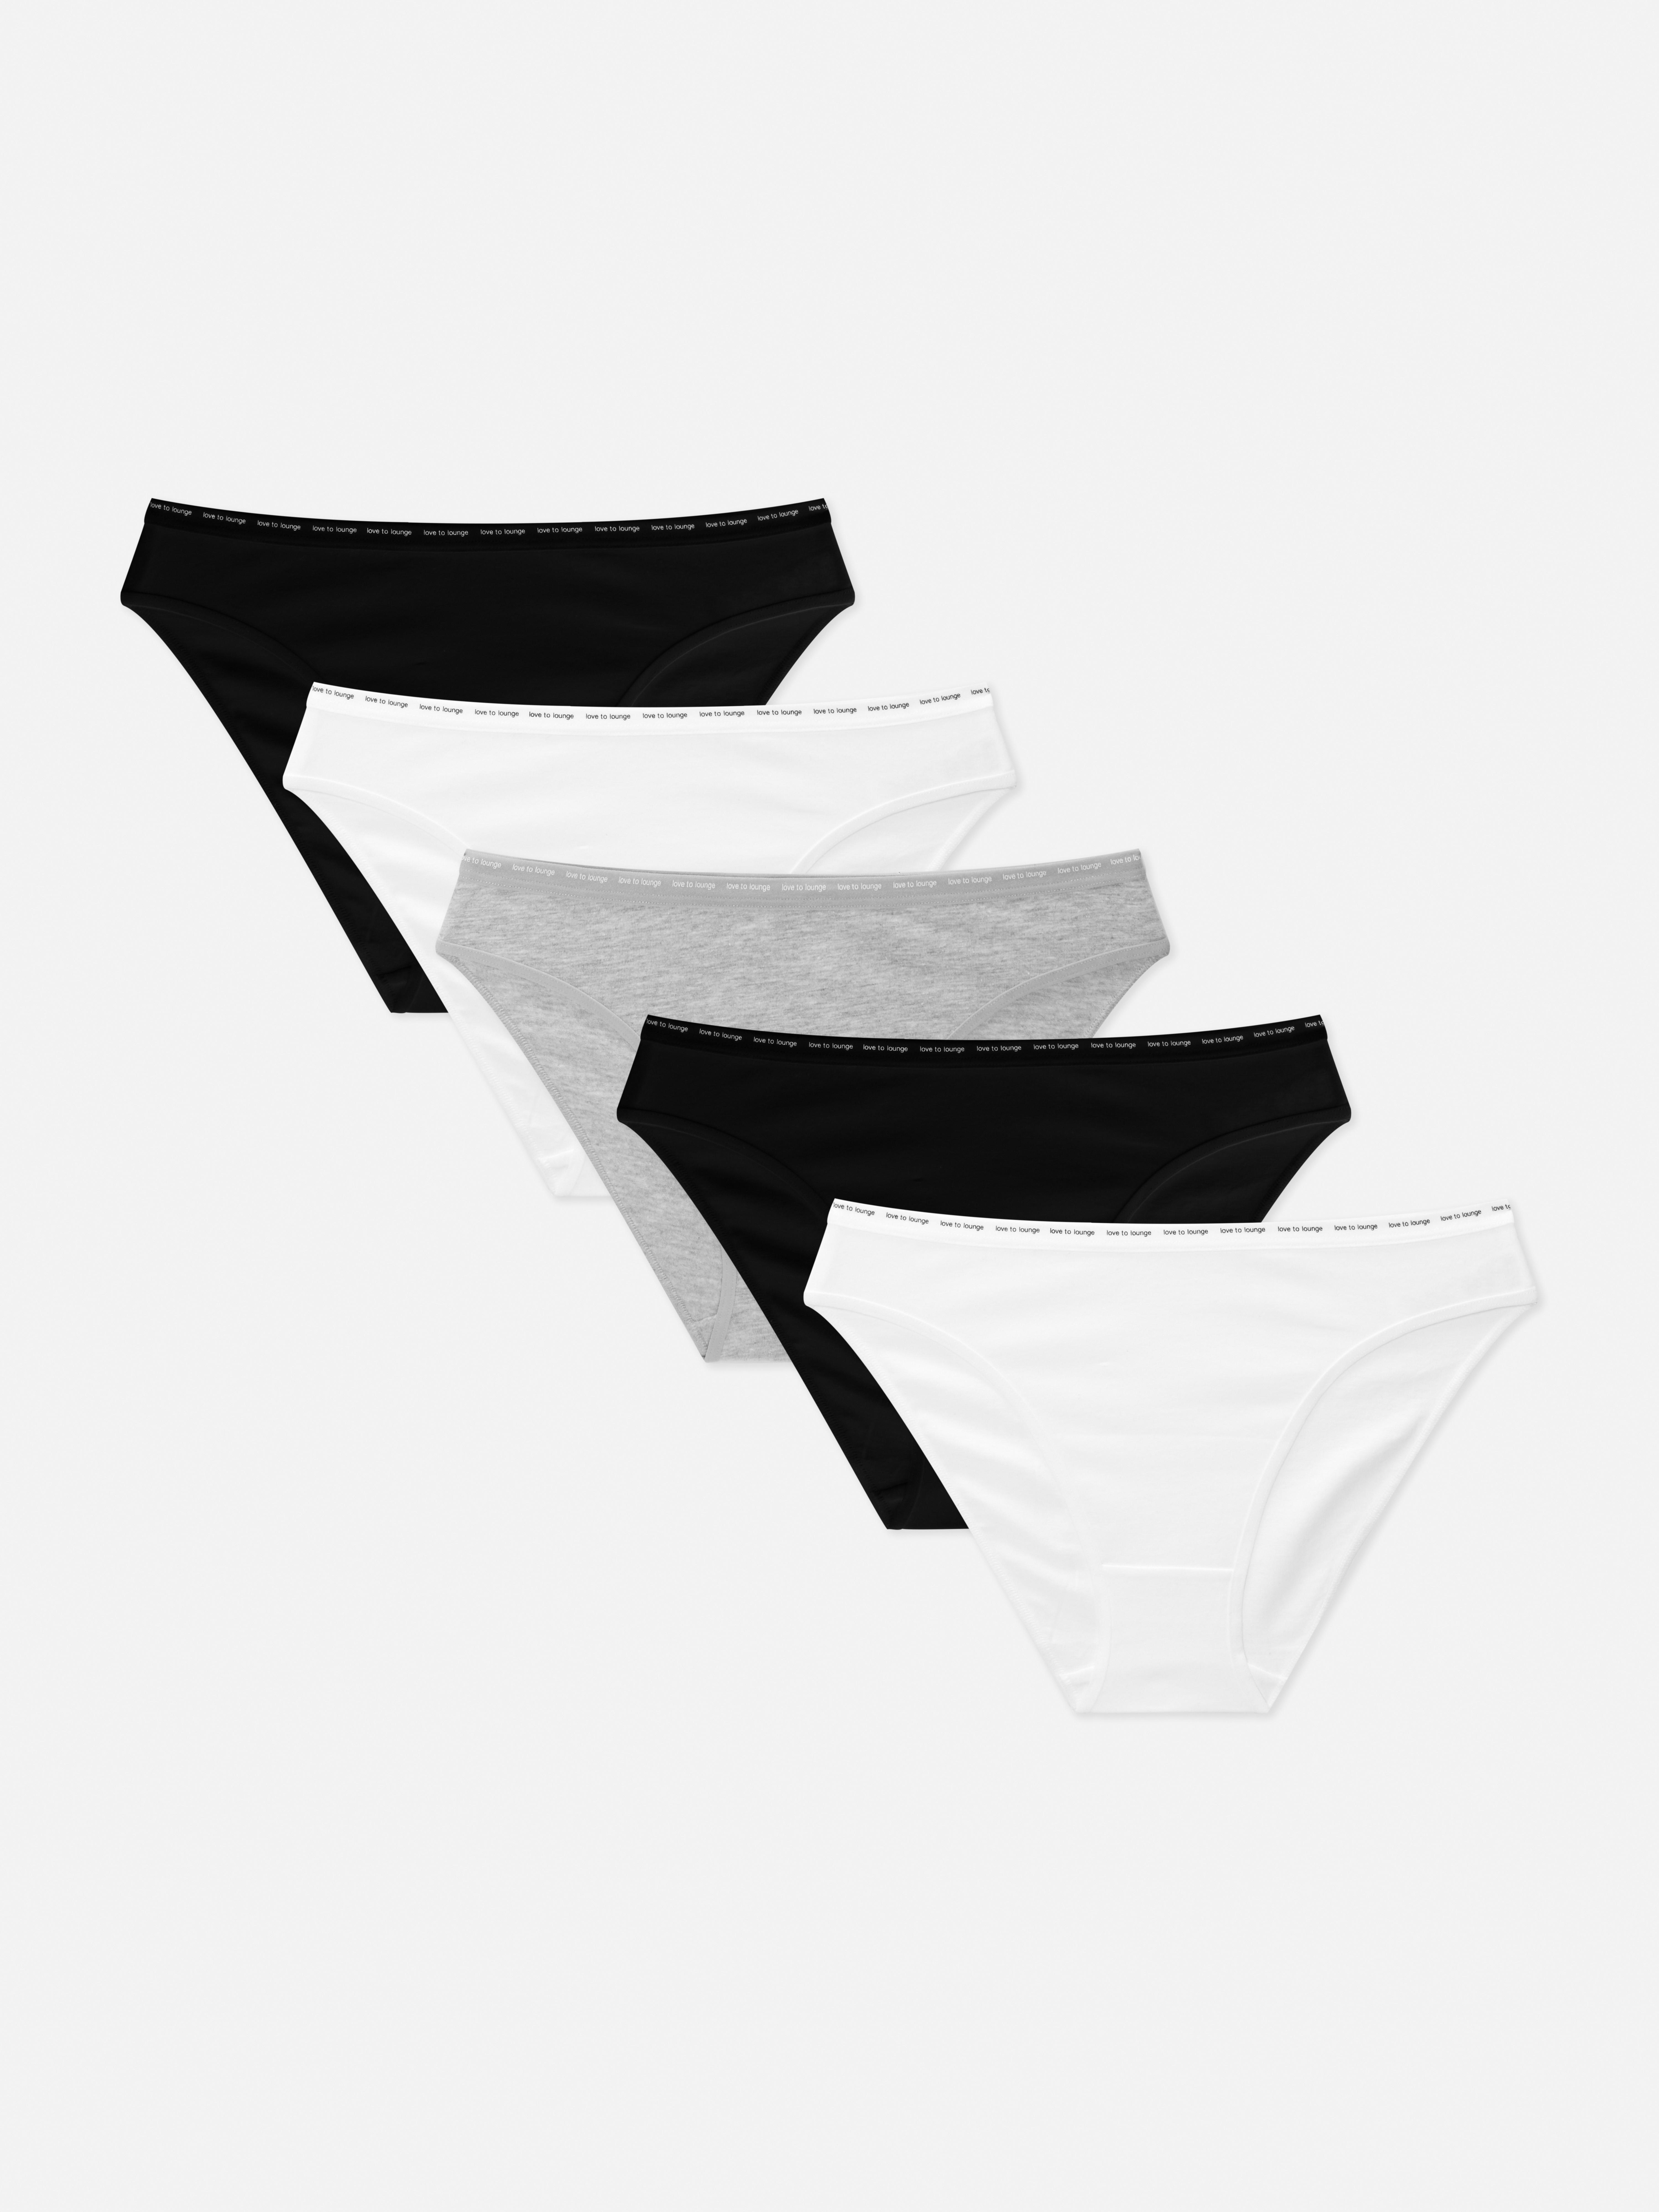 Women's Lace Knickers Panties Brazillian Full Brief Soft Underwear Primark